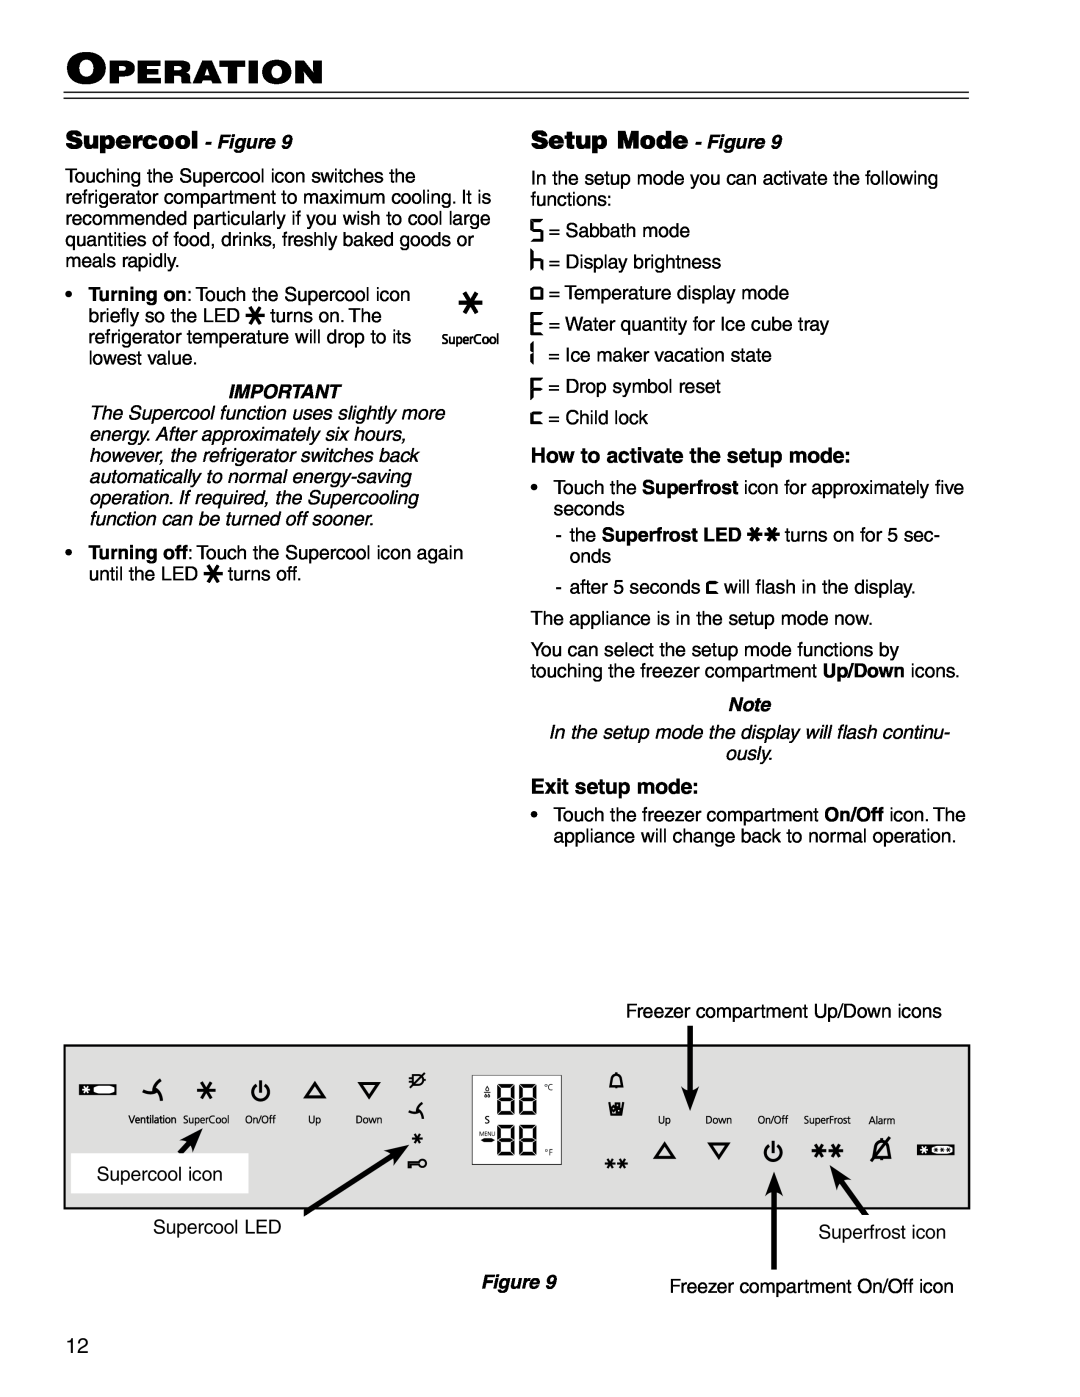 Liebherr CS 1660 manual Supercool - Figure, Setup Mode - Figure, How to activate the setup mode, Exit setup mode, Operation 